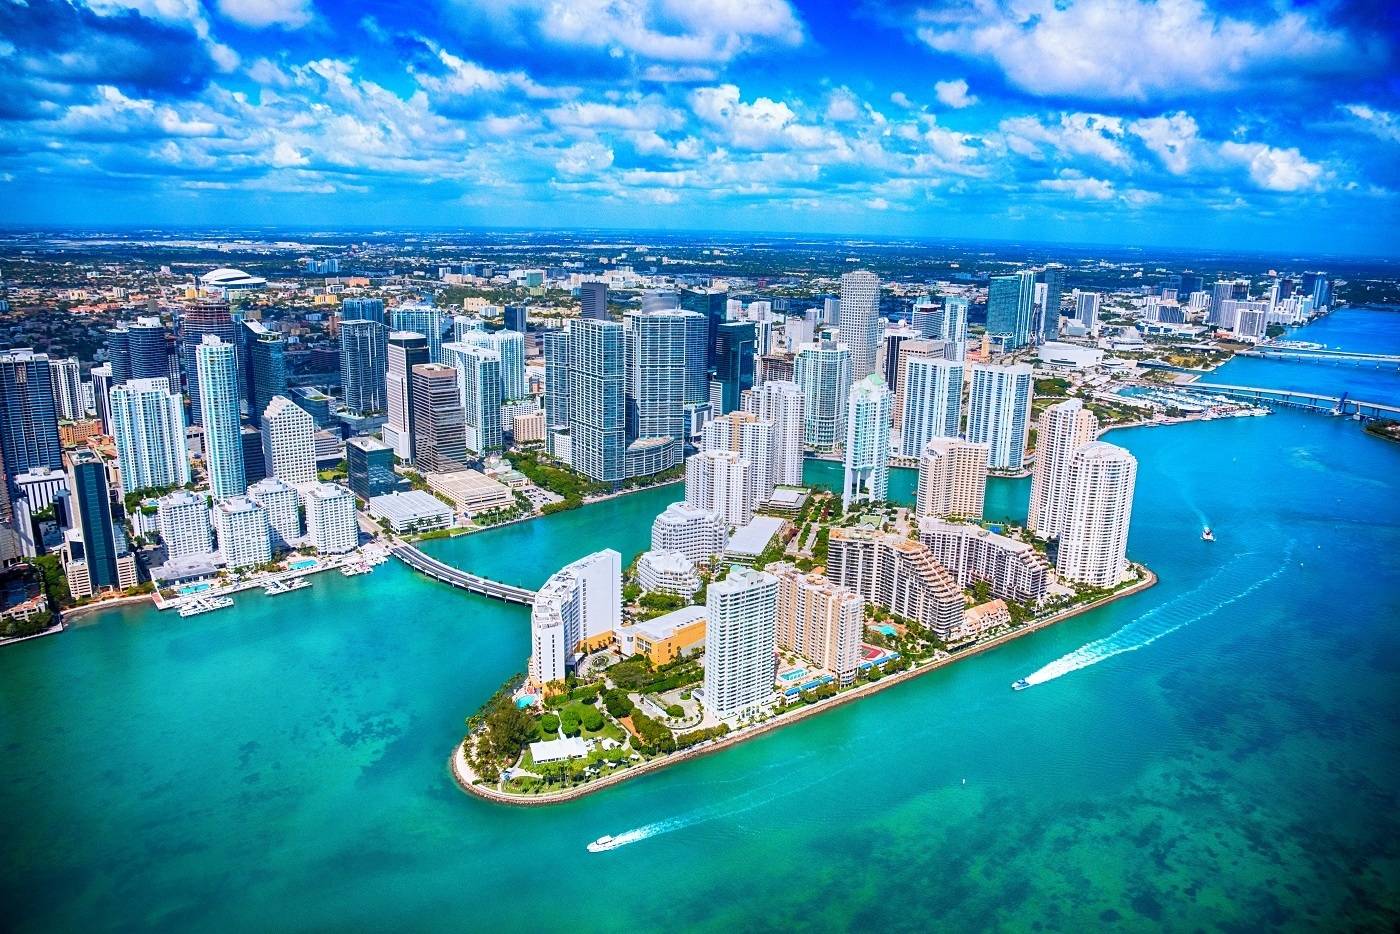 Miami - Cruise Capital of the World